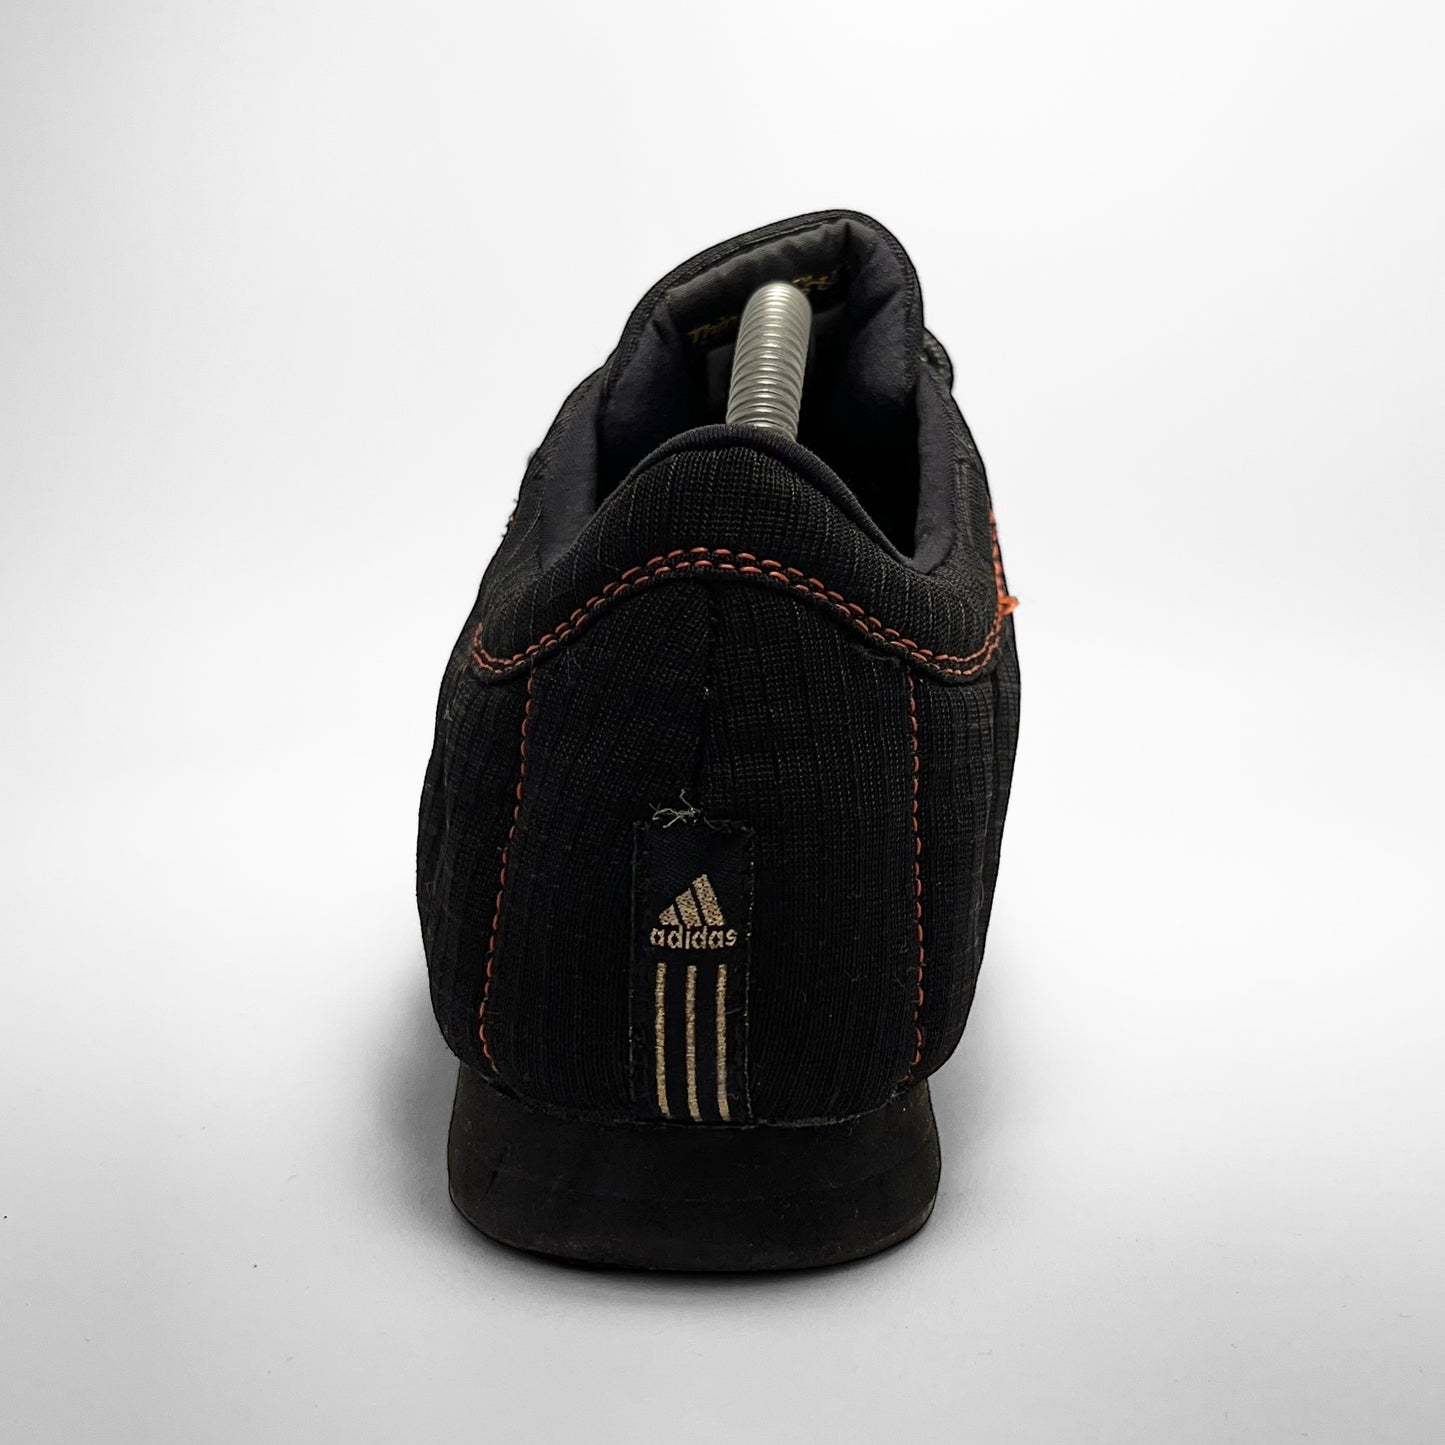 Adidas Climawarm Adventure Daroga ‘Sample’ (2003)